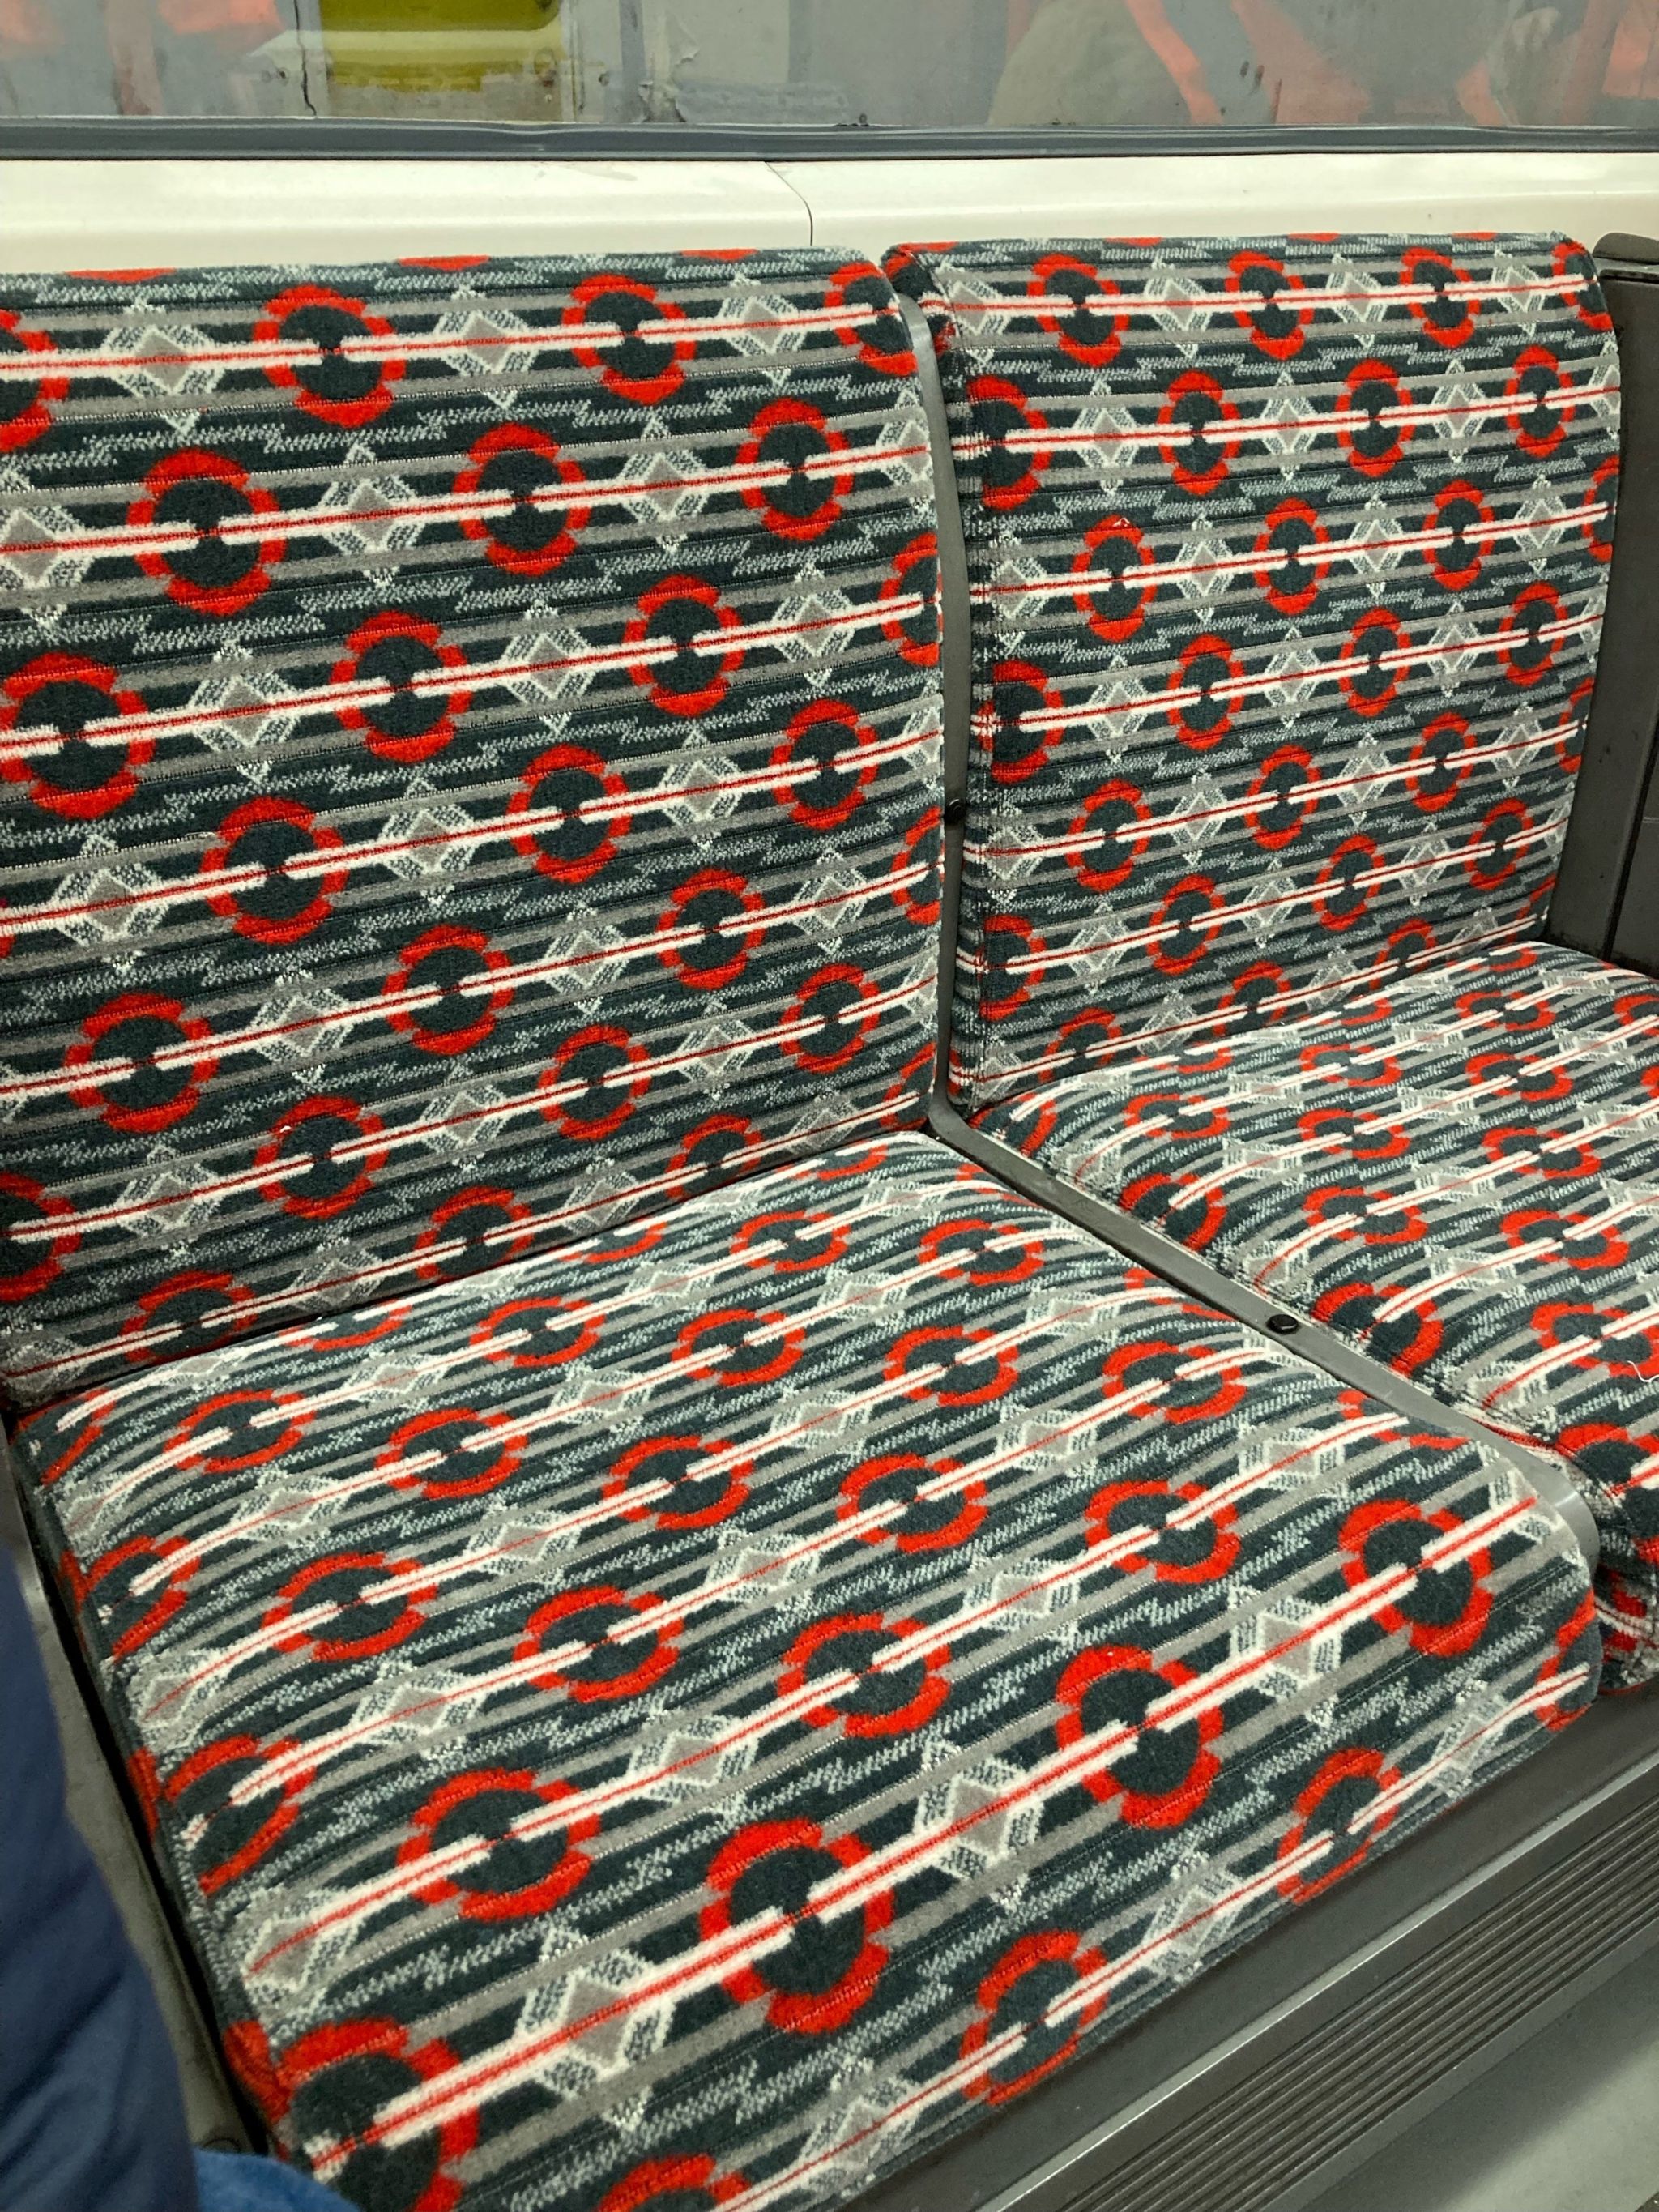 New central line seat design